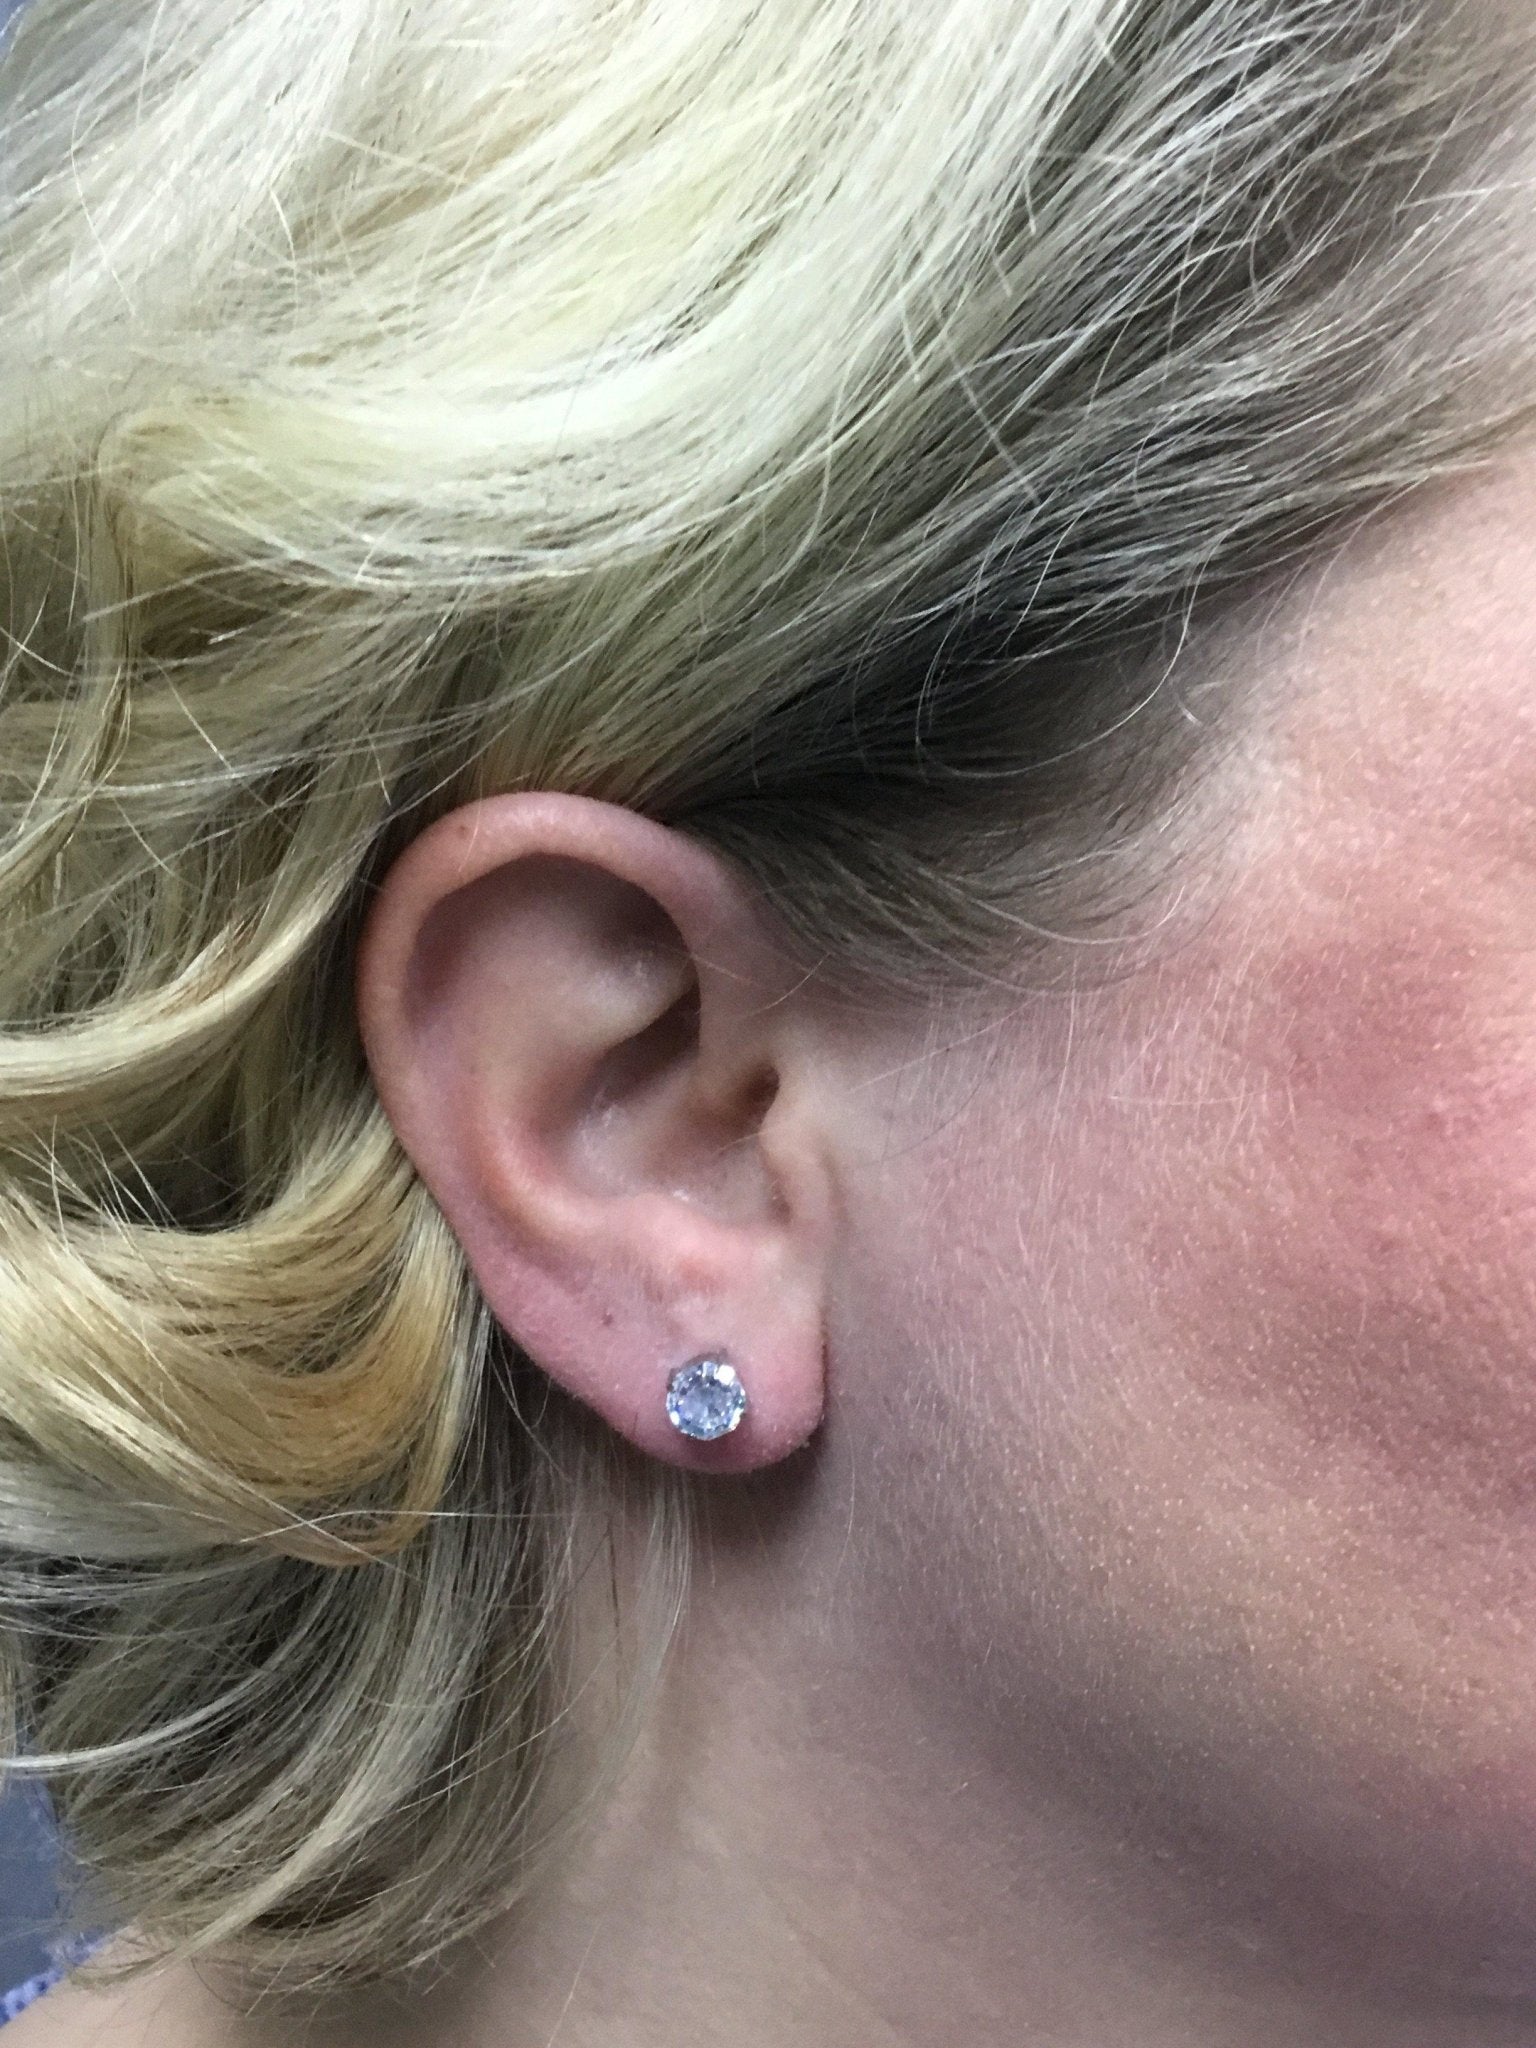 Titanium earring studs 3mm  Swarovski gemstone hypoallergenic ear piercing stud pair pick your anodized color - SirenBodyJewelry